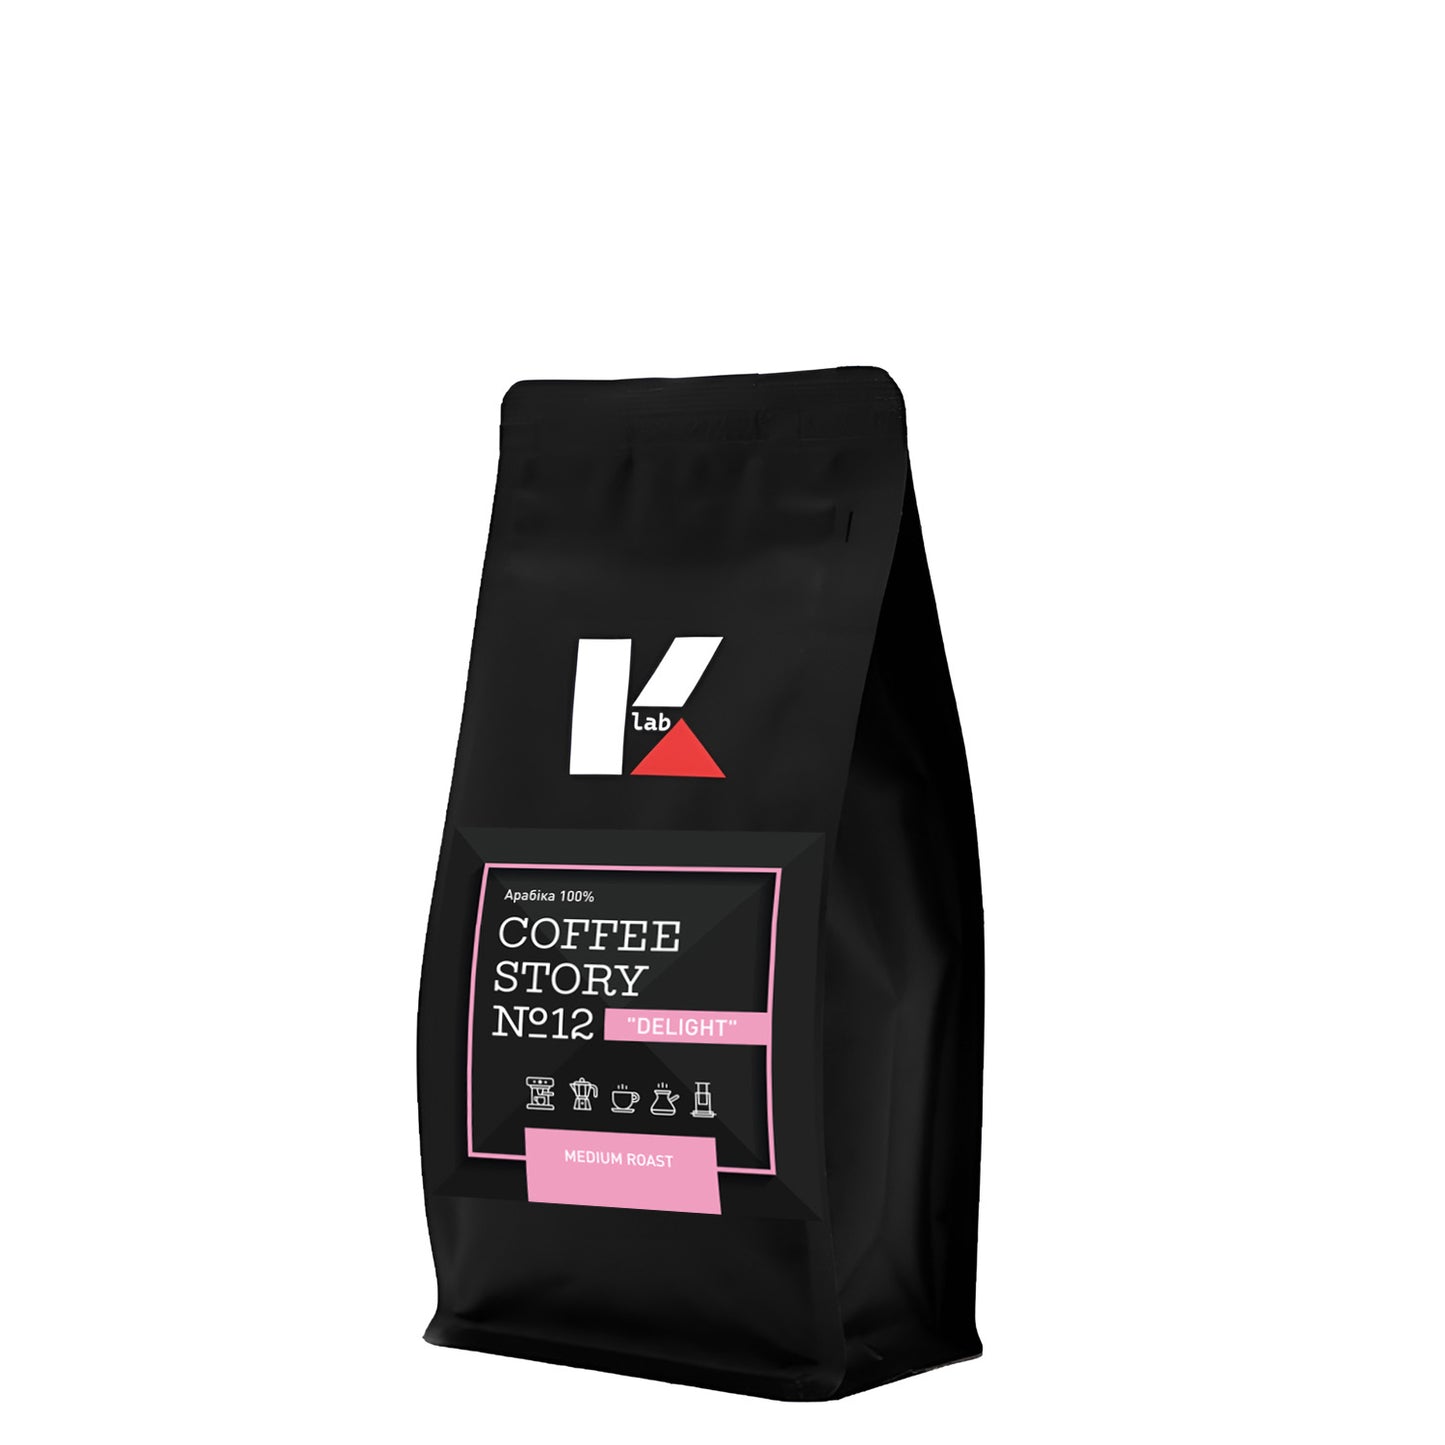 COFFEE STORY №12 - Klab (0.35kg front)